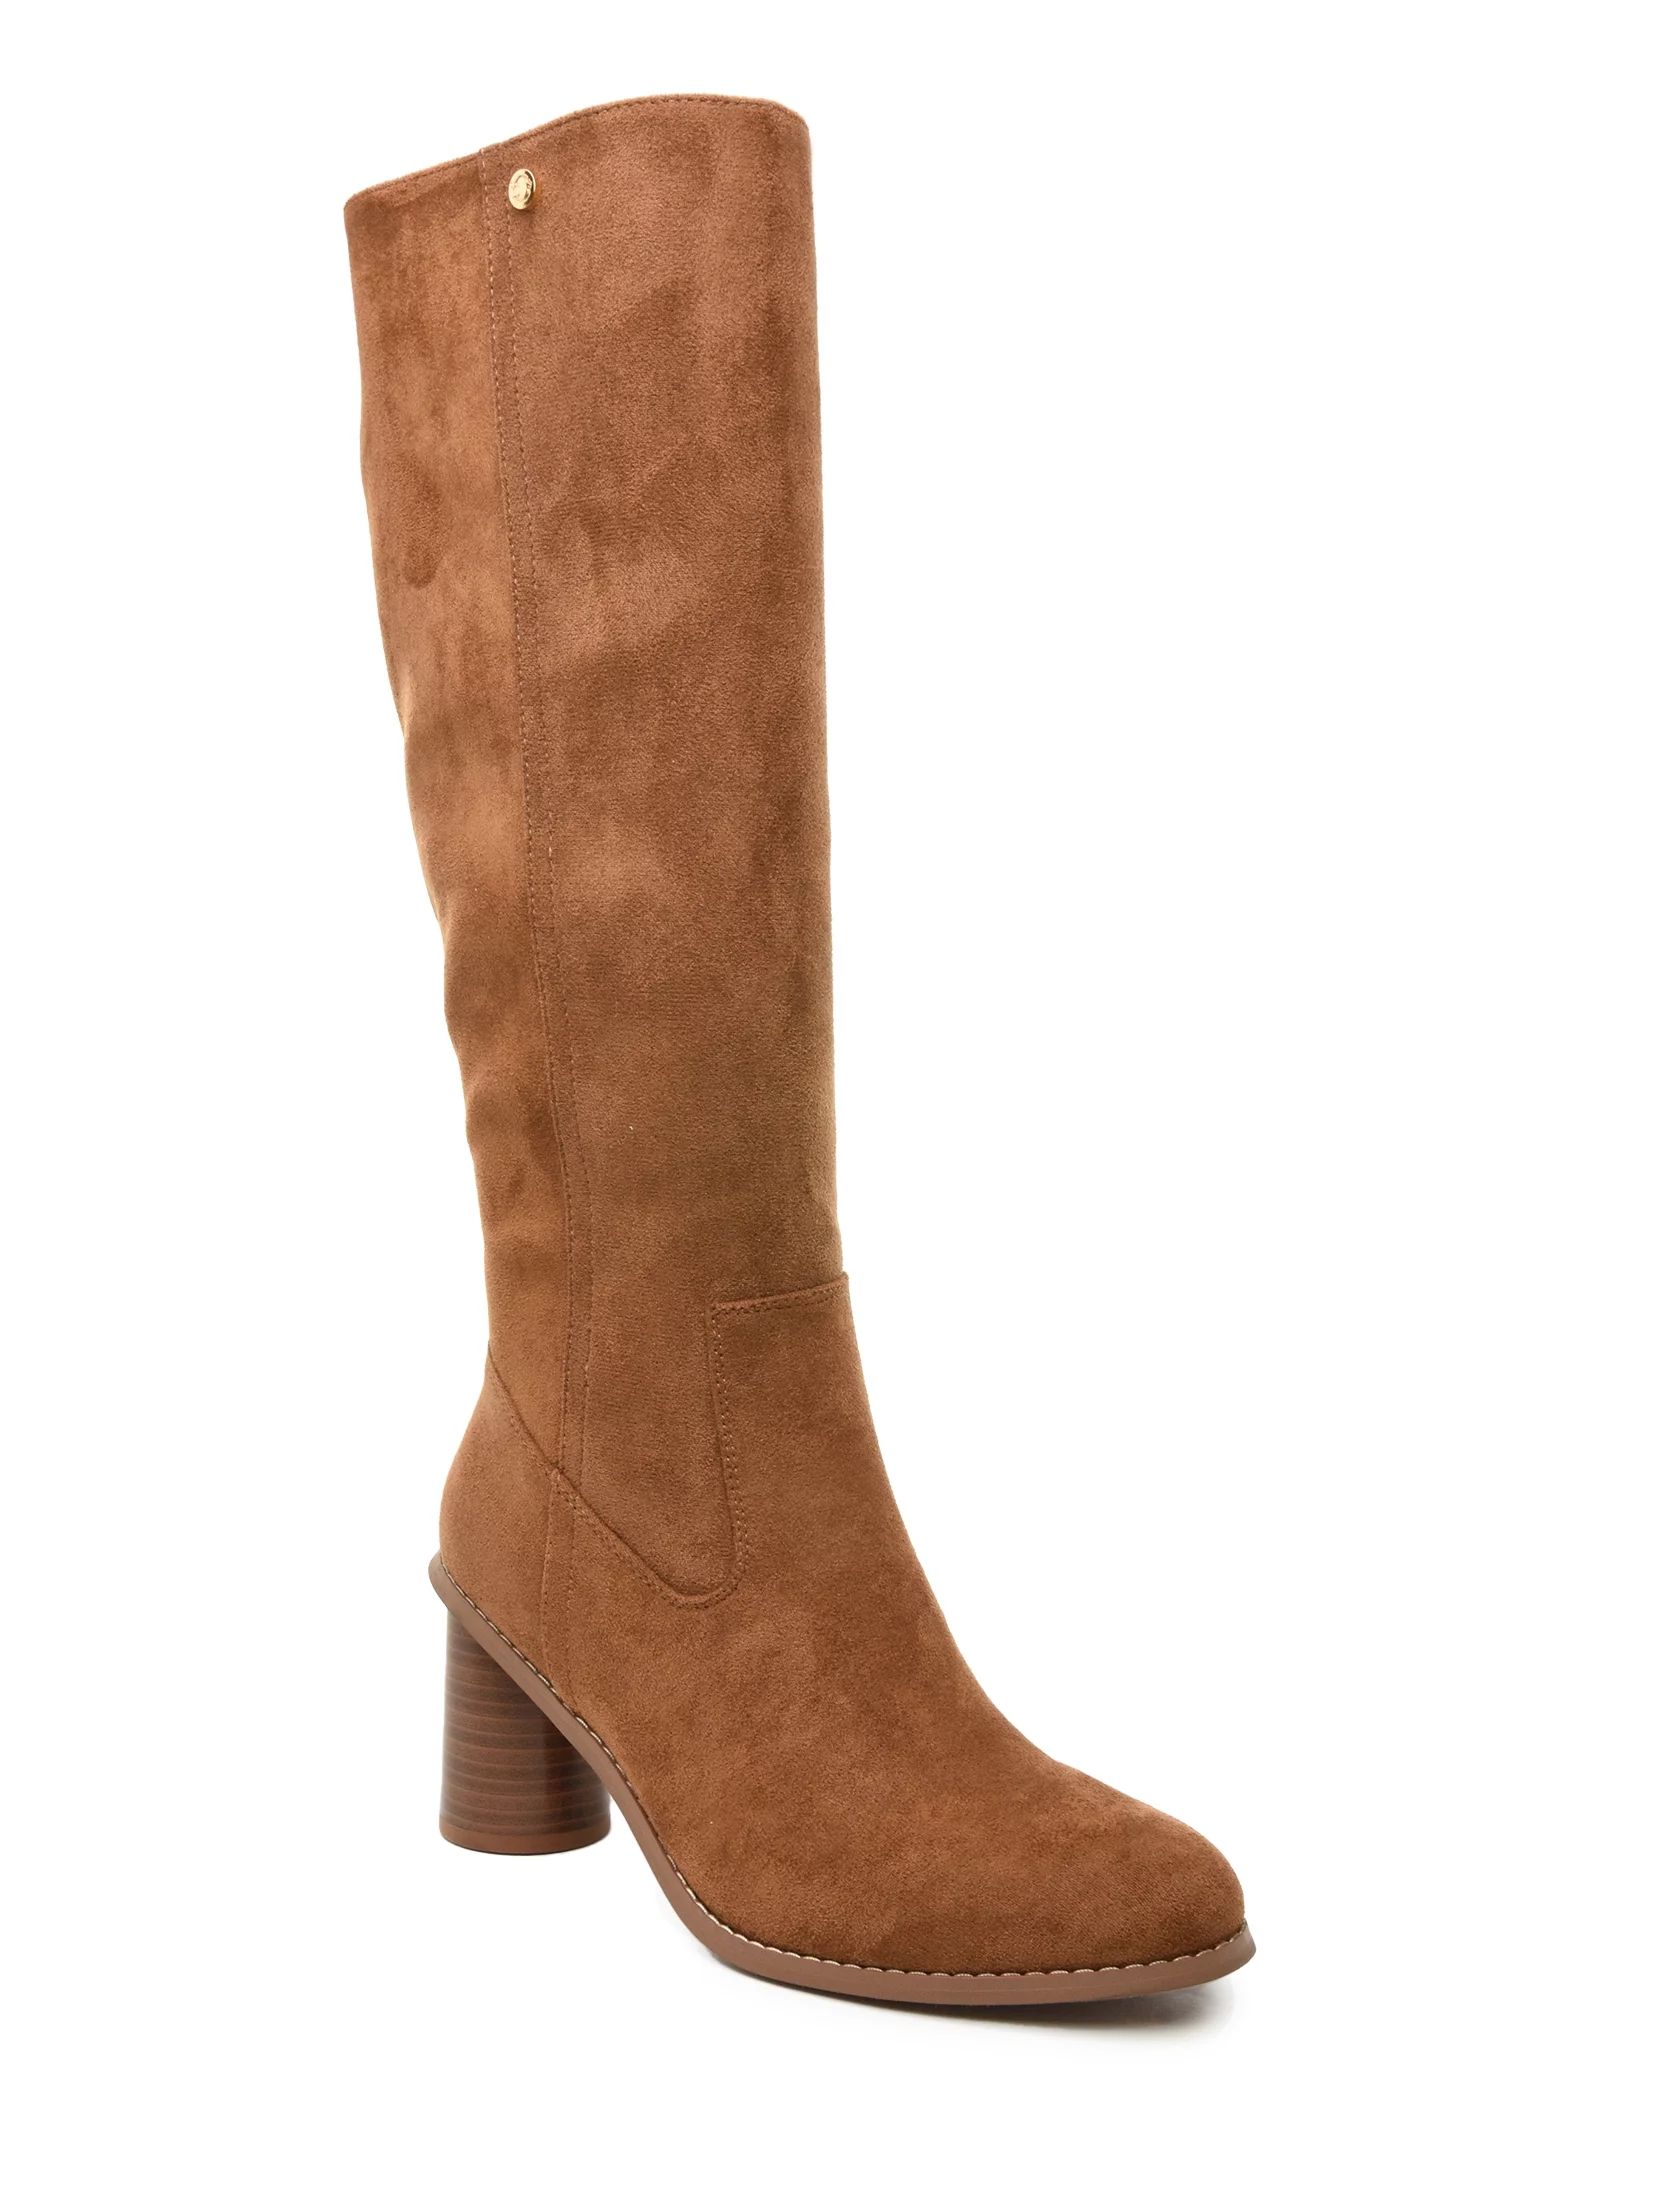 C. Wonder Women's Microsuede Knee High Heeled Boot | Walmart (US)